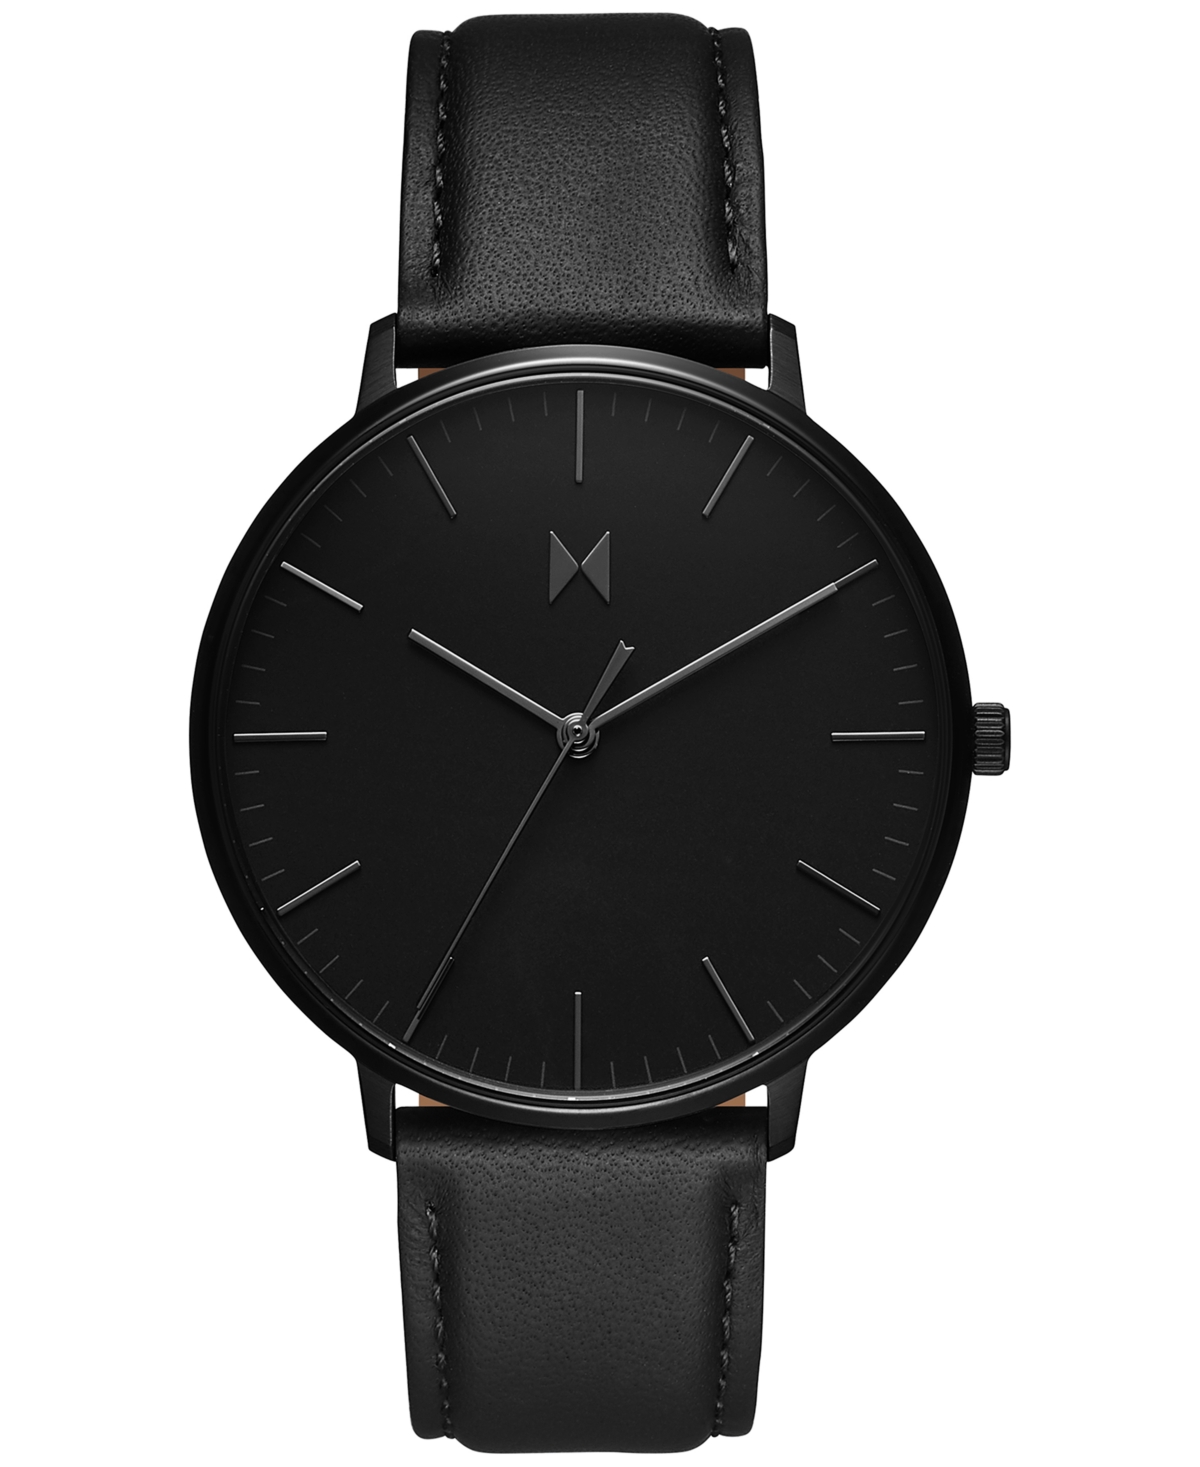 Men's Legacy Black Leather Strap Watch, 42mm - Black